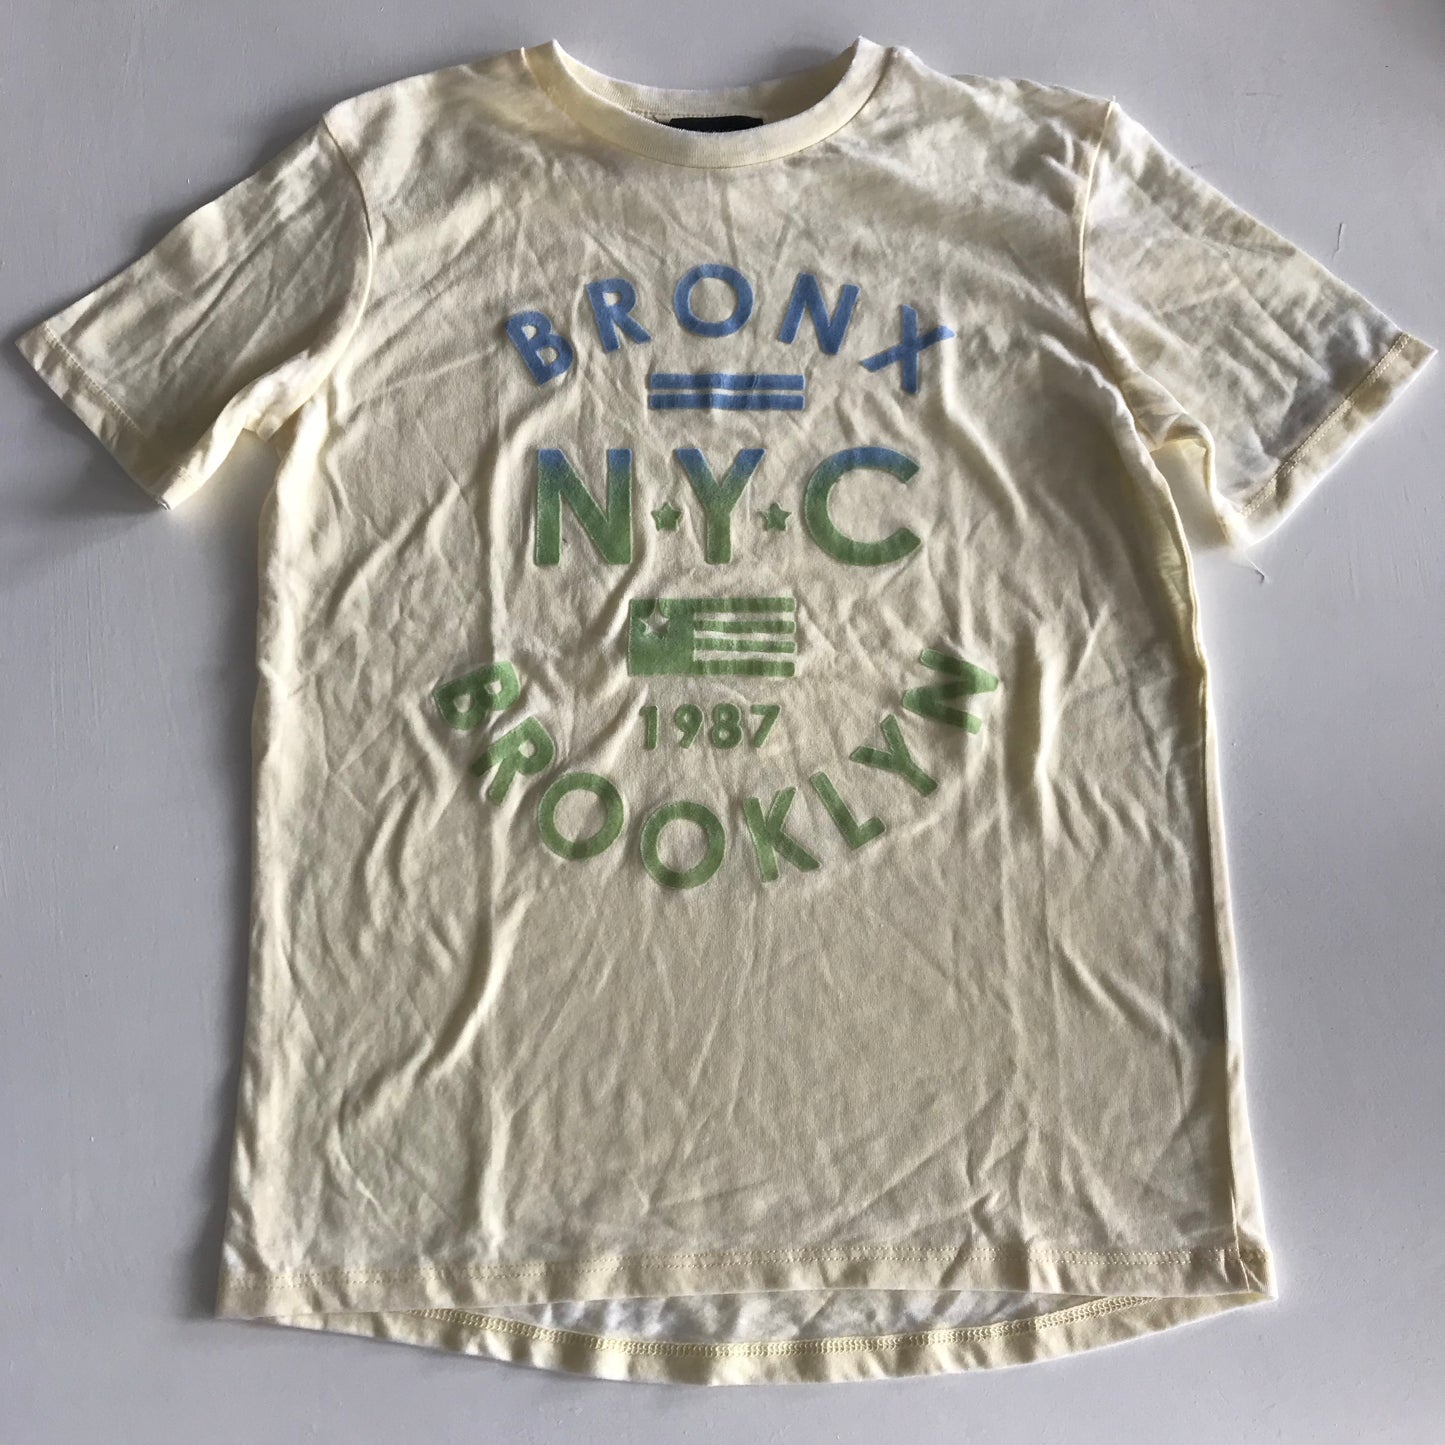 T-shirt - River Island - Age 7